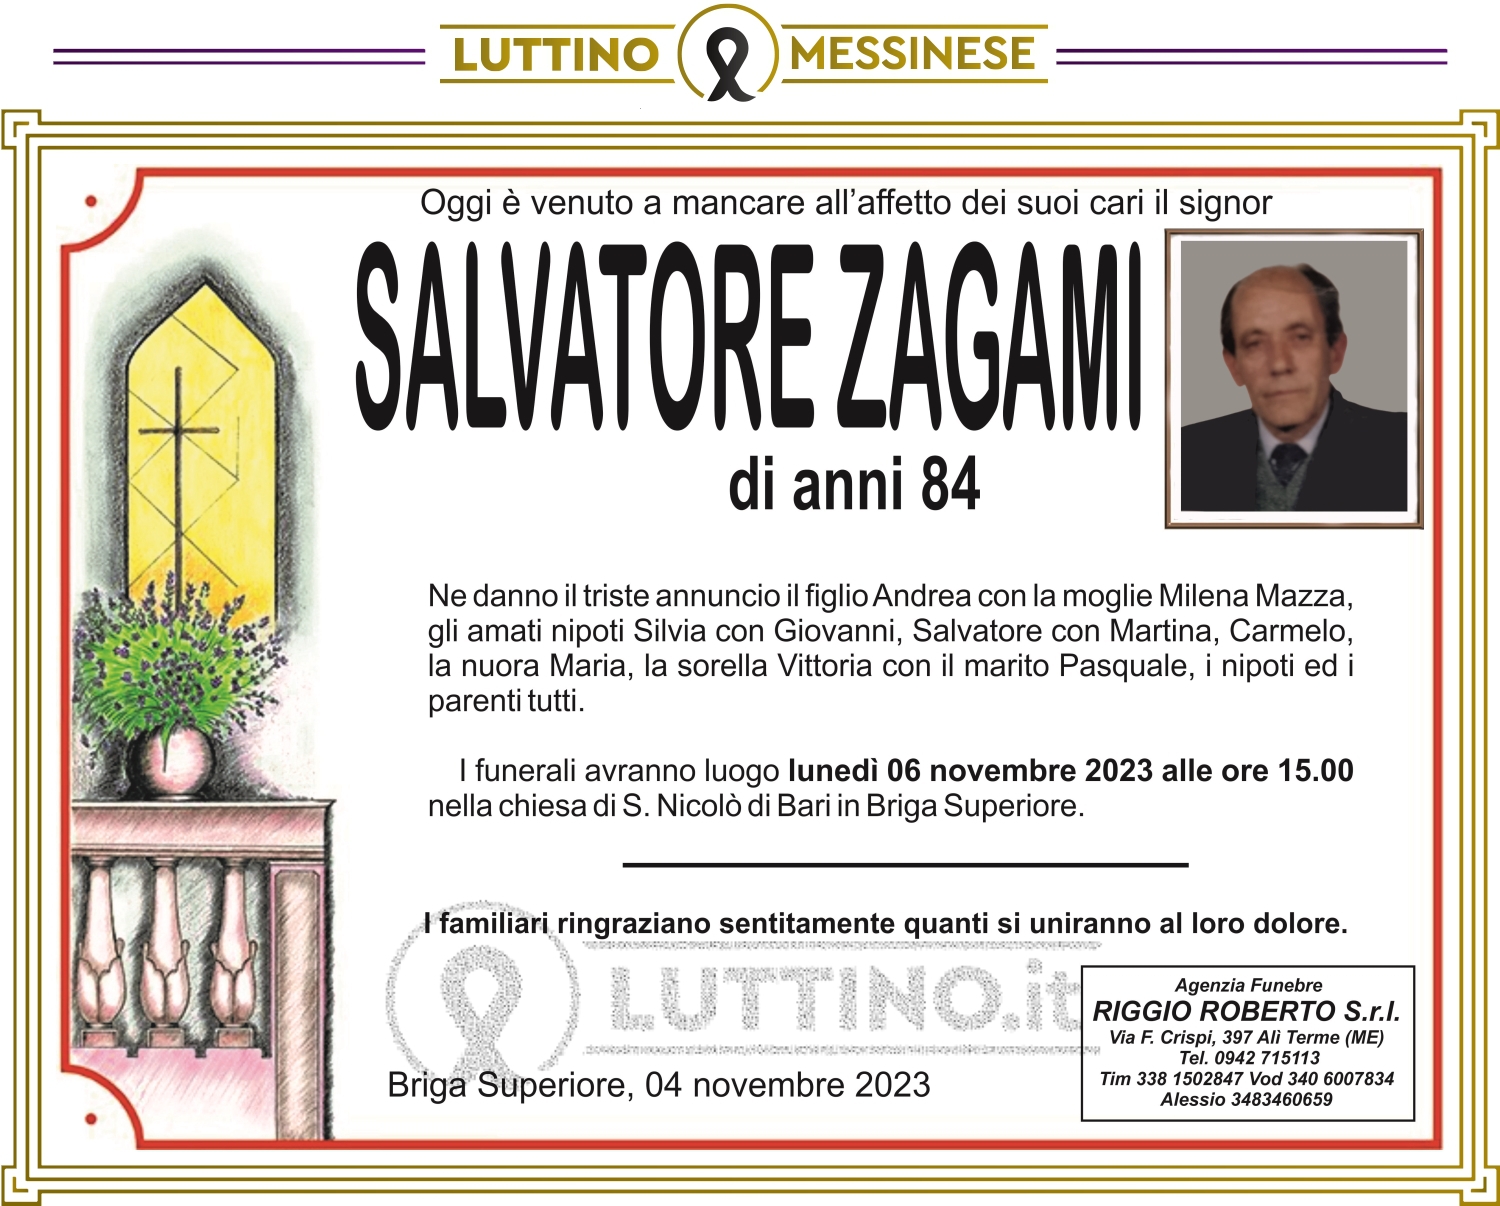 Salvatore Zagami